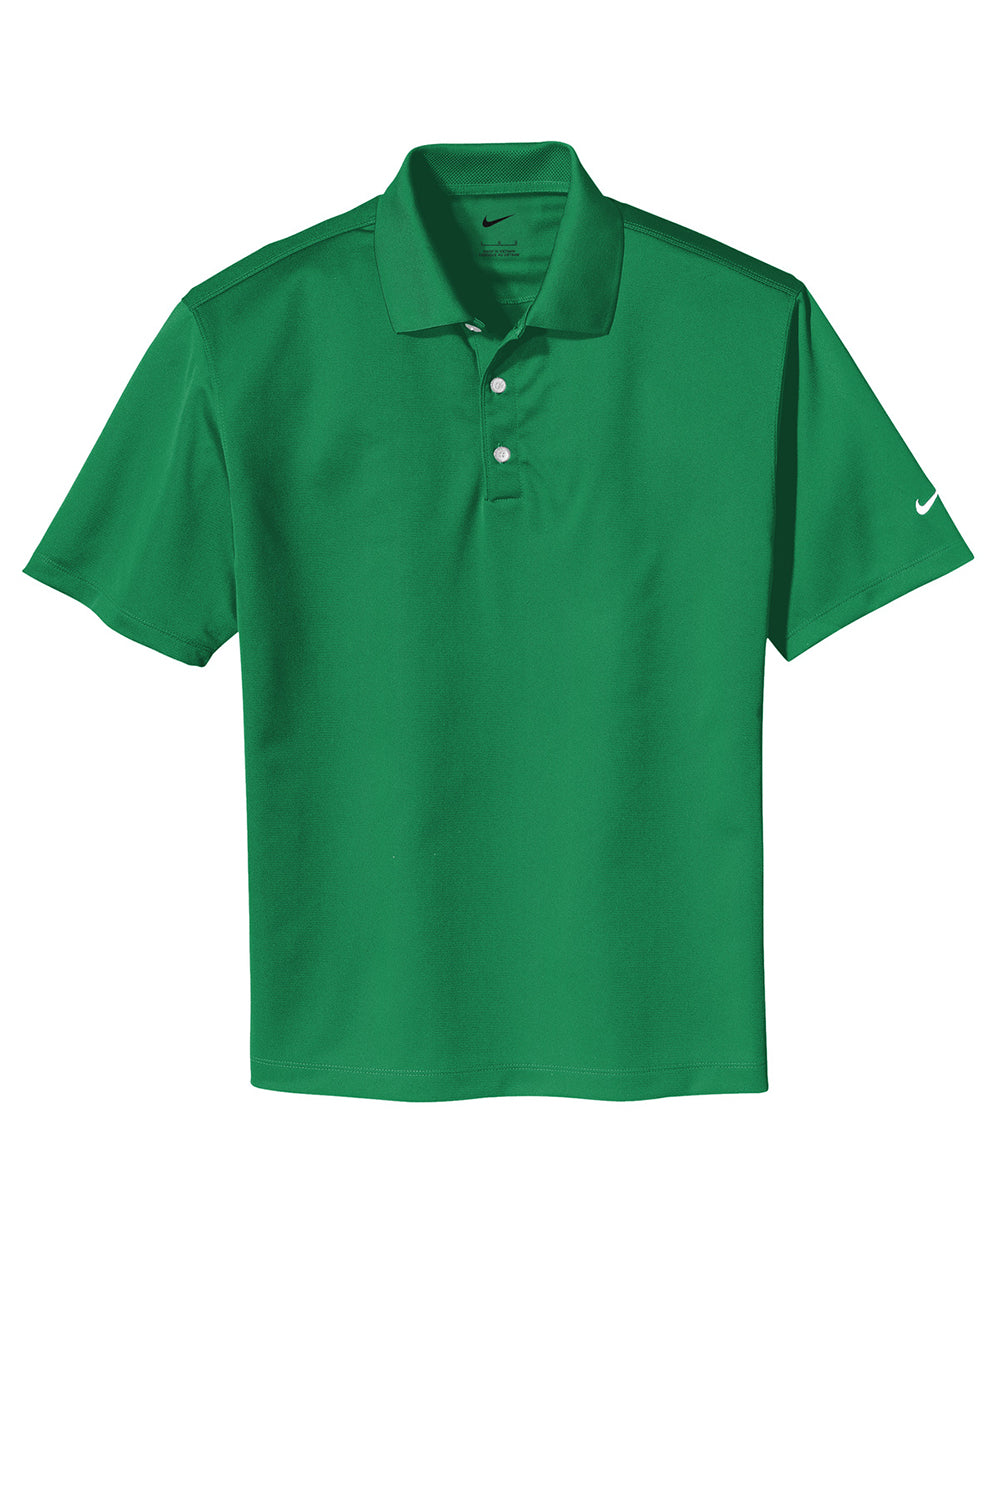 Nike 203690 Mens Tech Basic Dri-Fit Moisture Wicking Short Sleeve Polo Shirt Lucky Green Flat Front